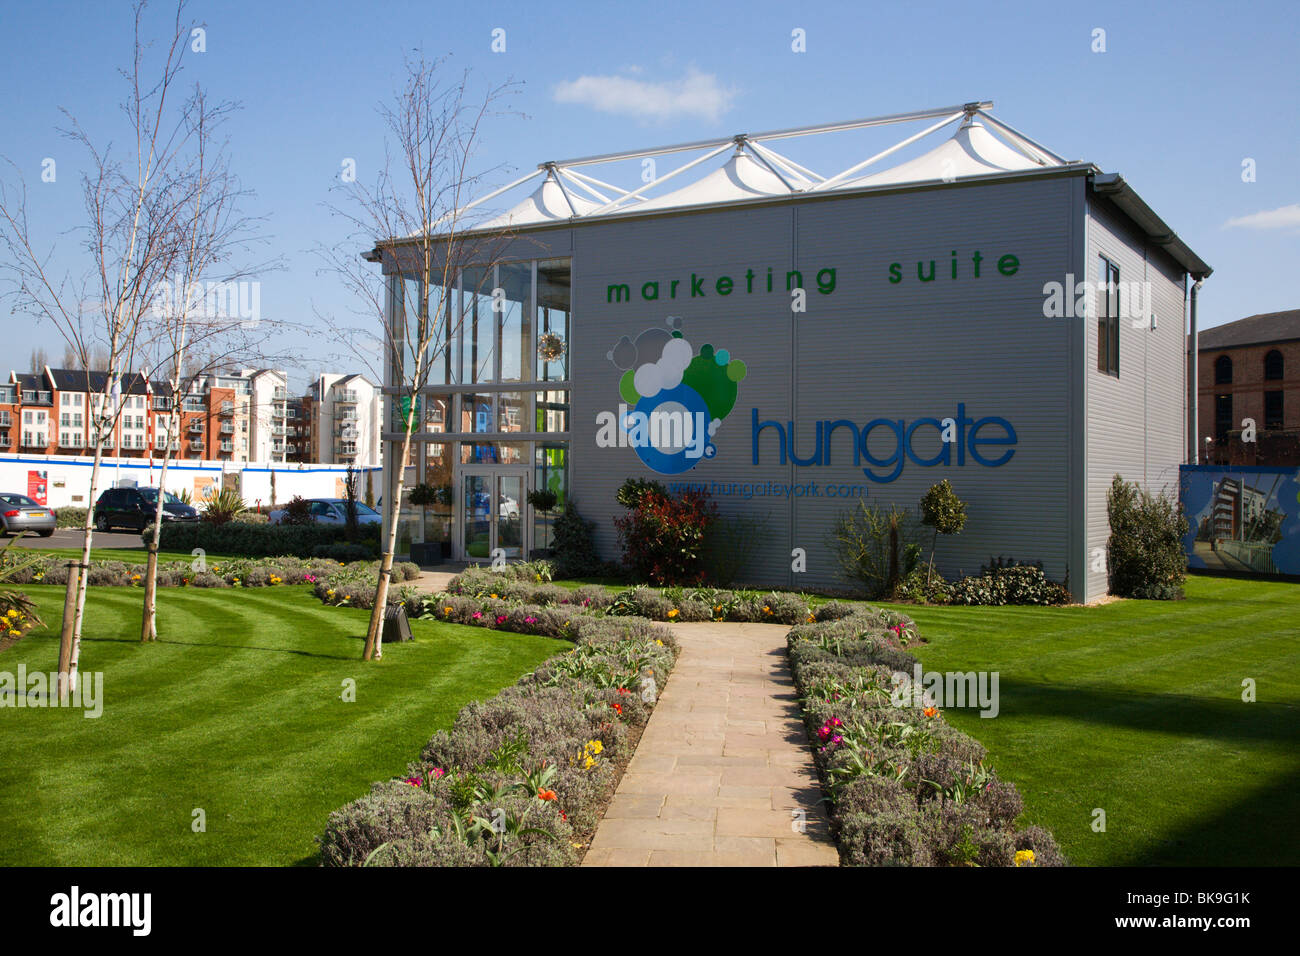 Hungate Residential Property Marketing Suite York UK Stock Photo